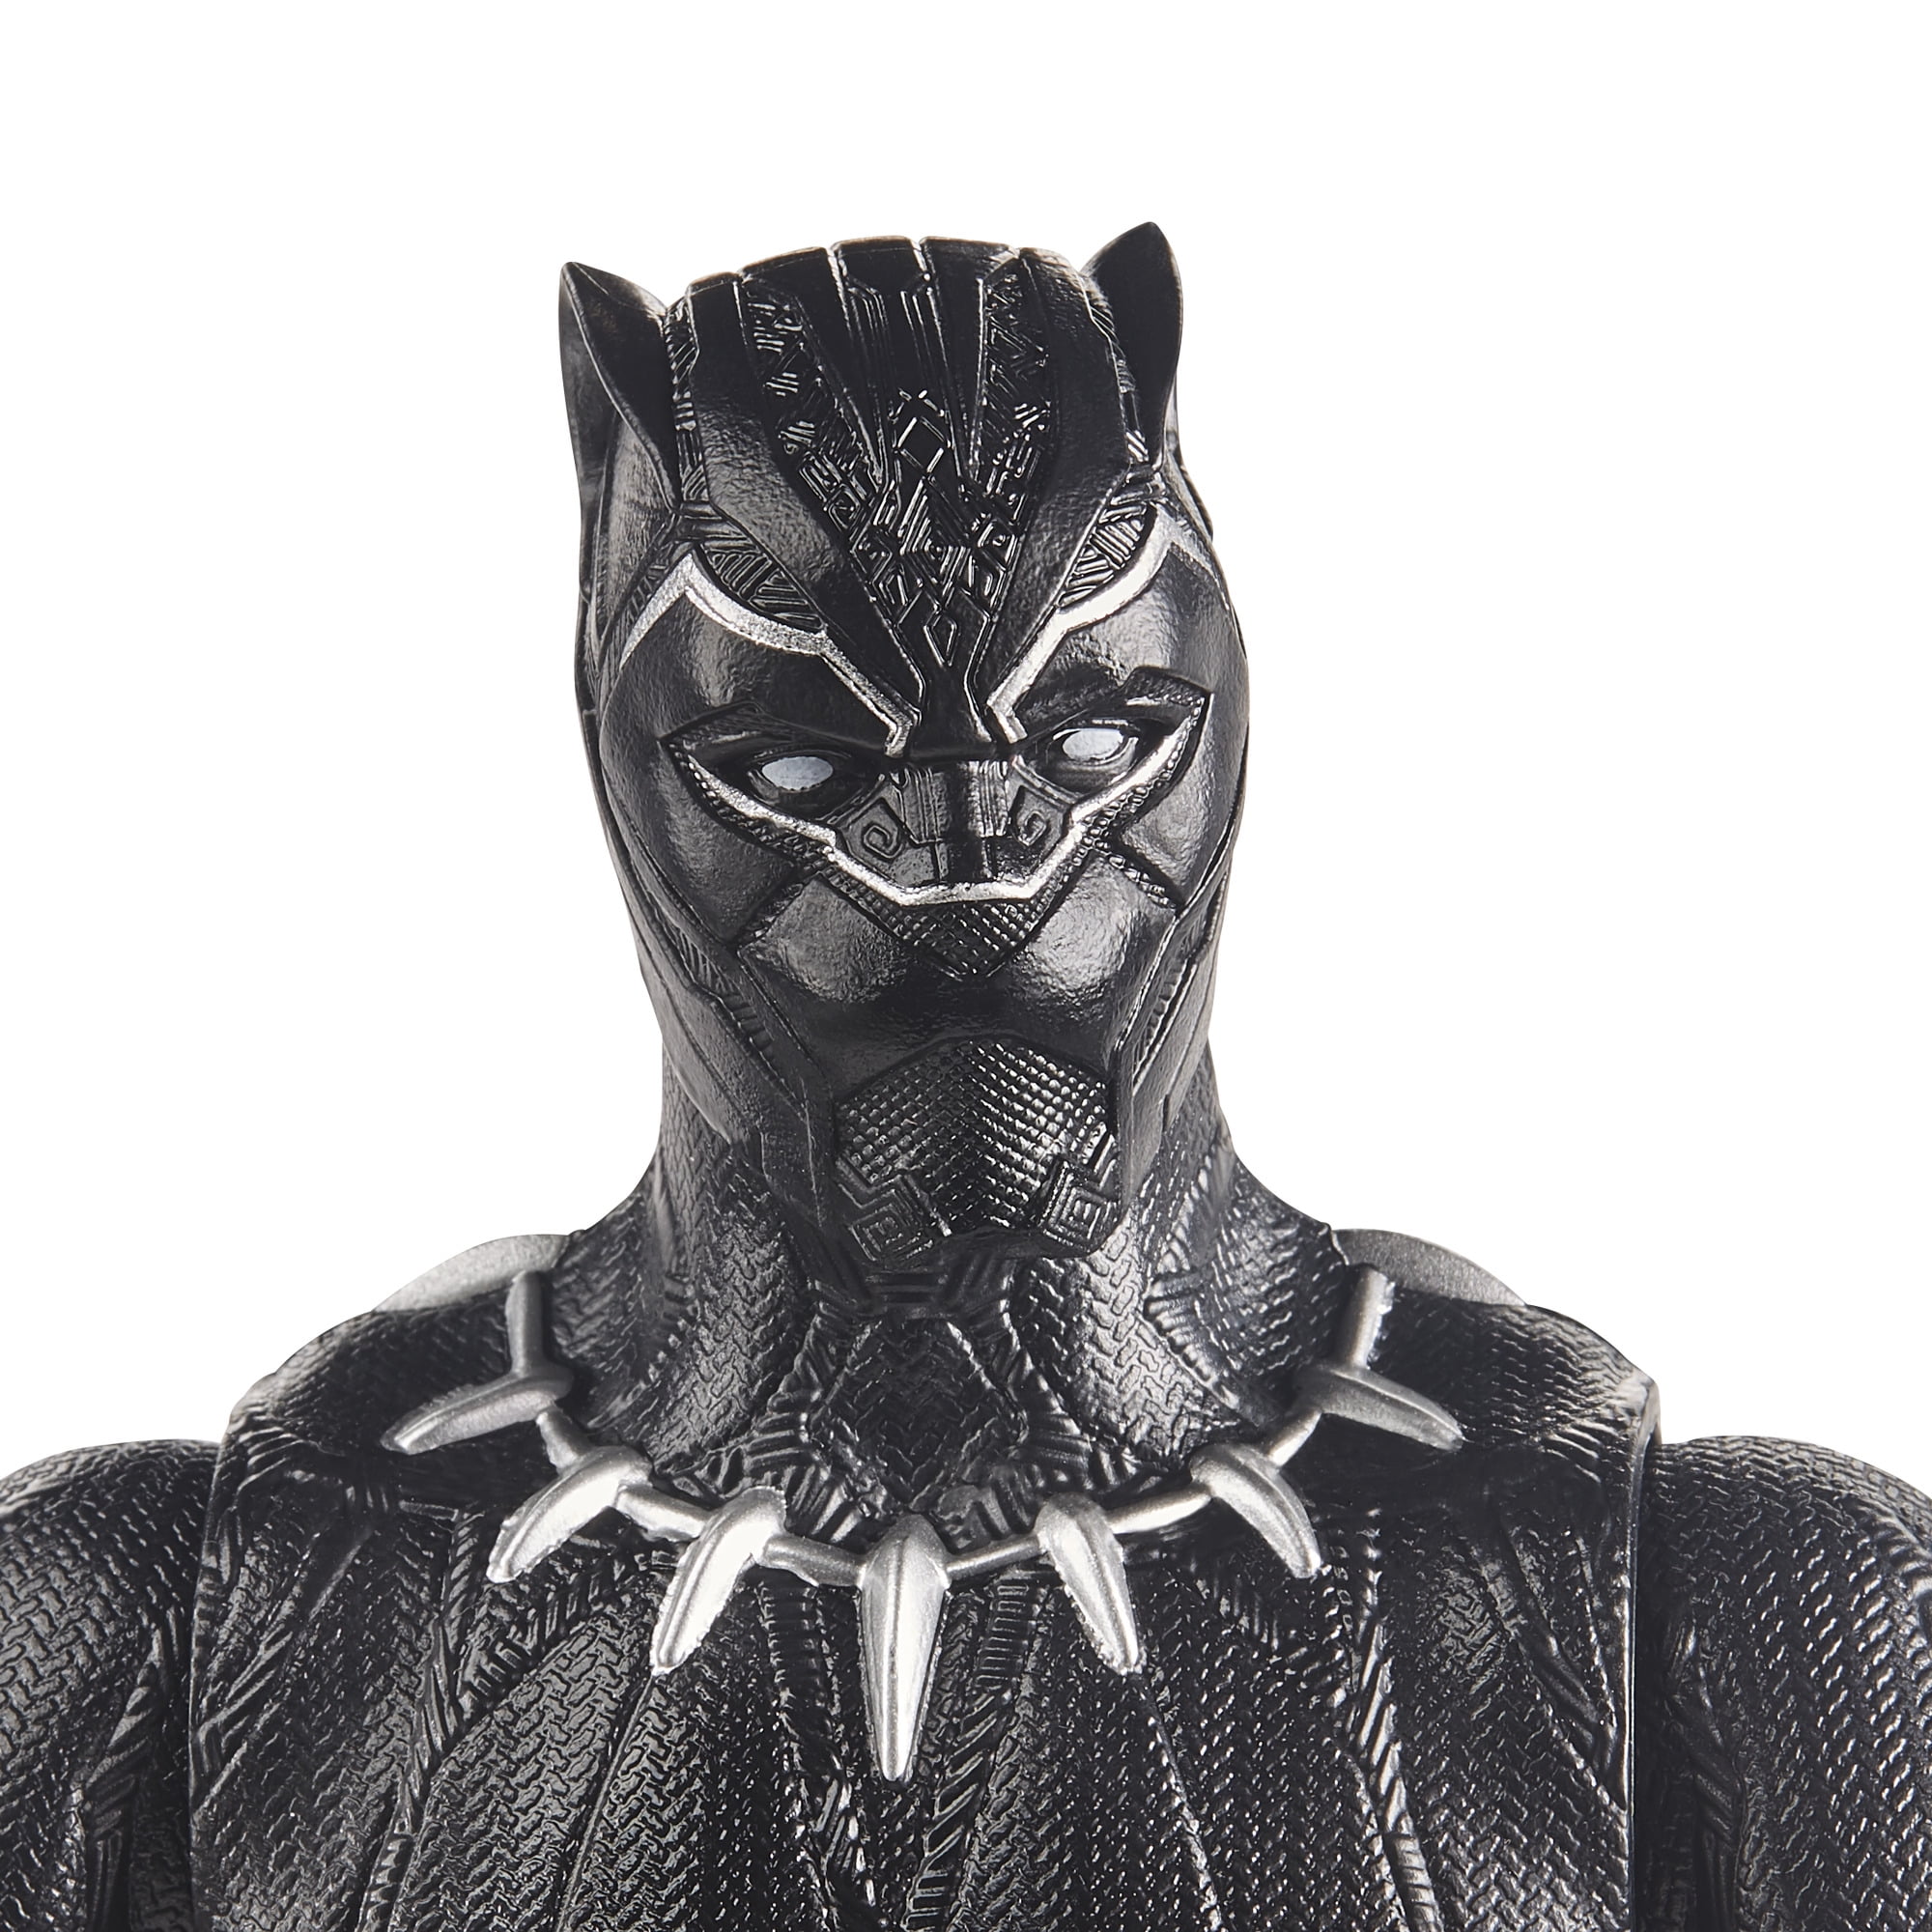 Figurine - Marvel Avengers - Black Panther Titan Hero Blast Gear Deluxe